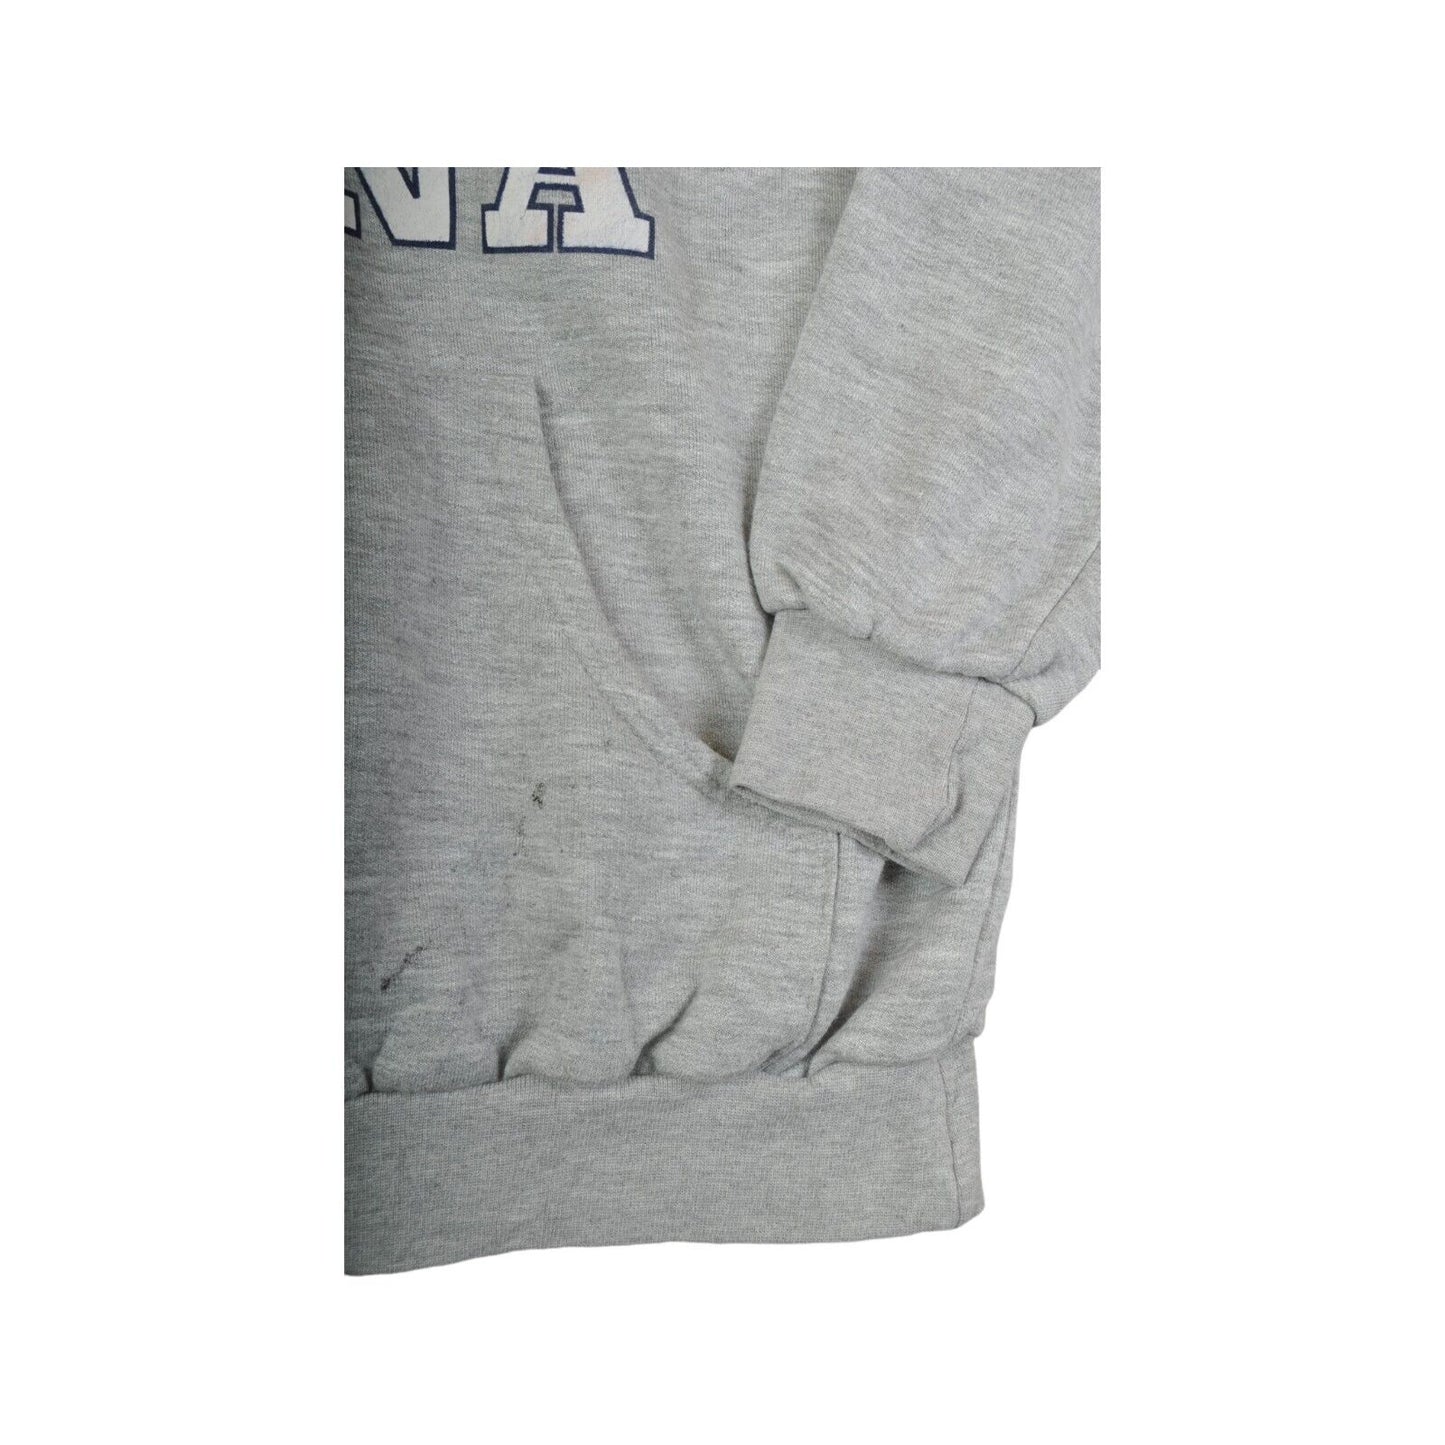 Vintage Universita' Siena Hoodie Sweatshirt Grey Medium